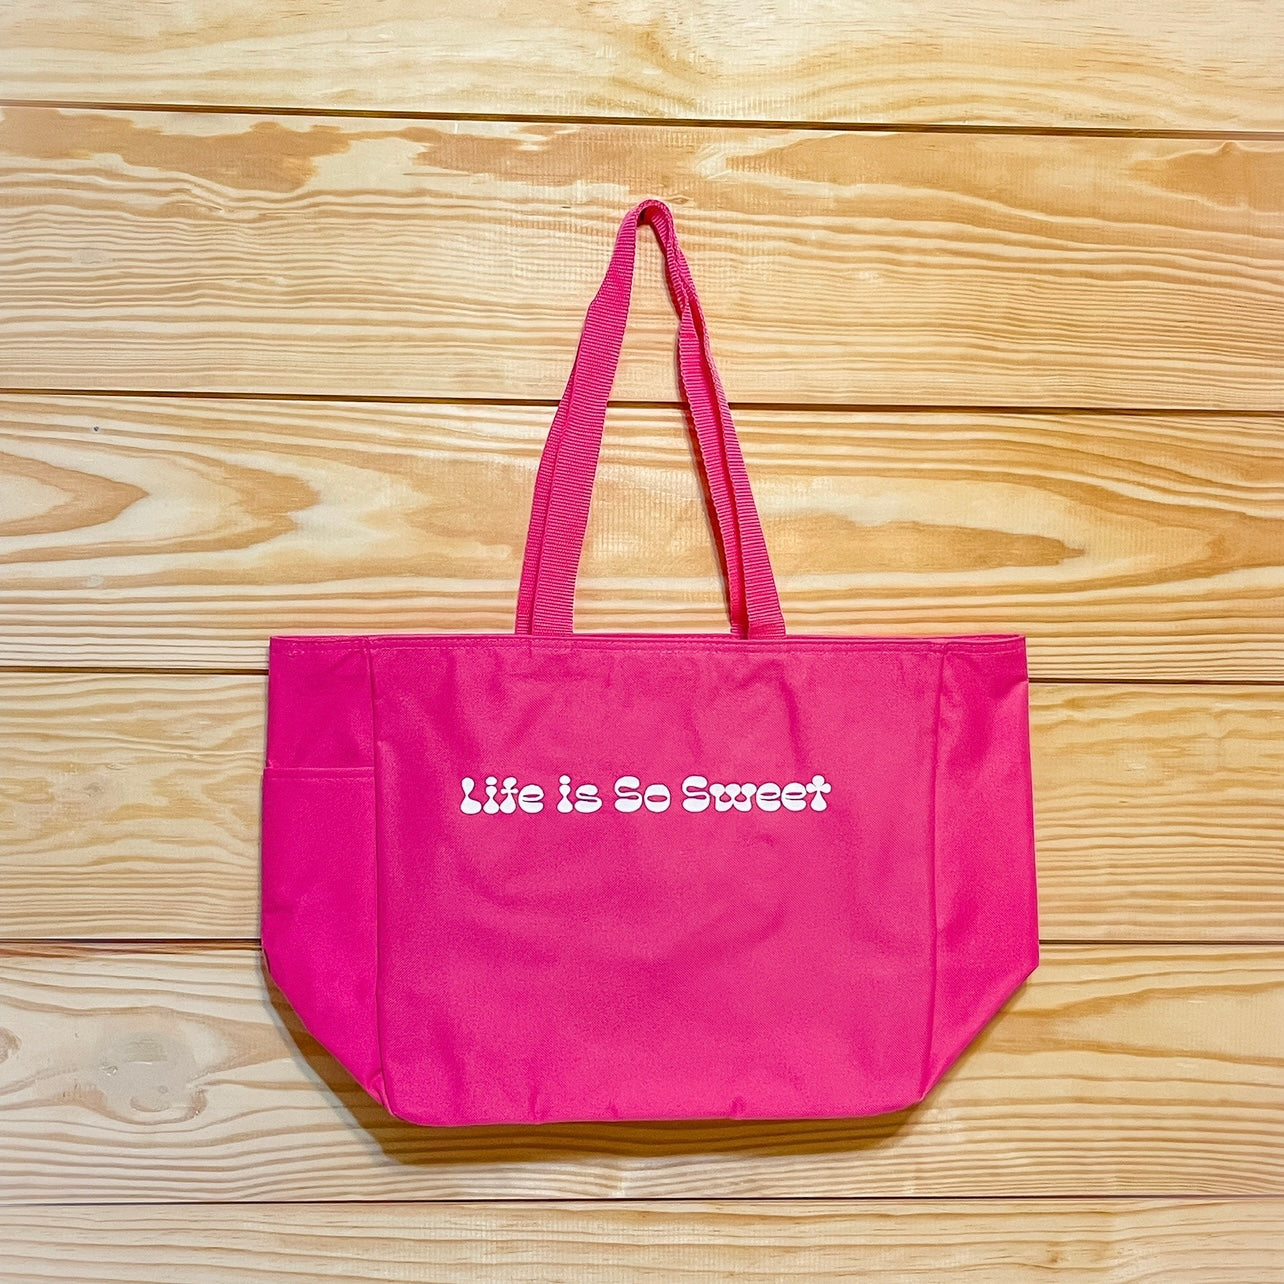 life is so sweet tote bag ✨